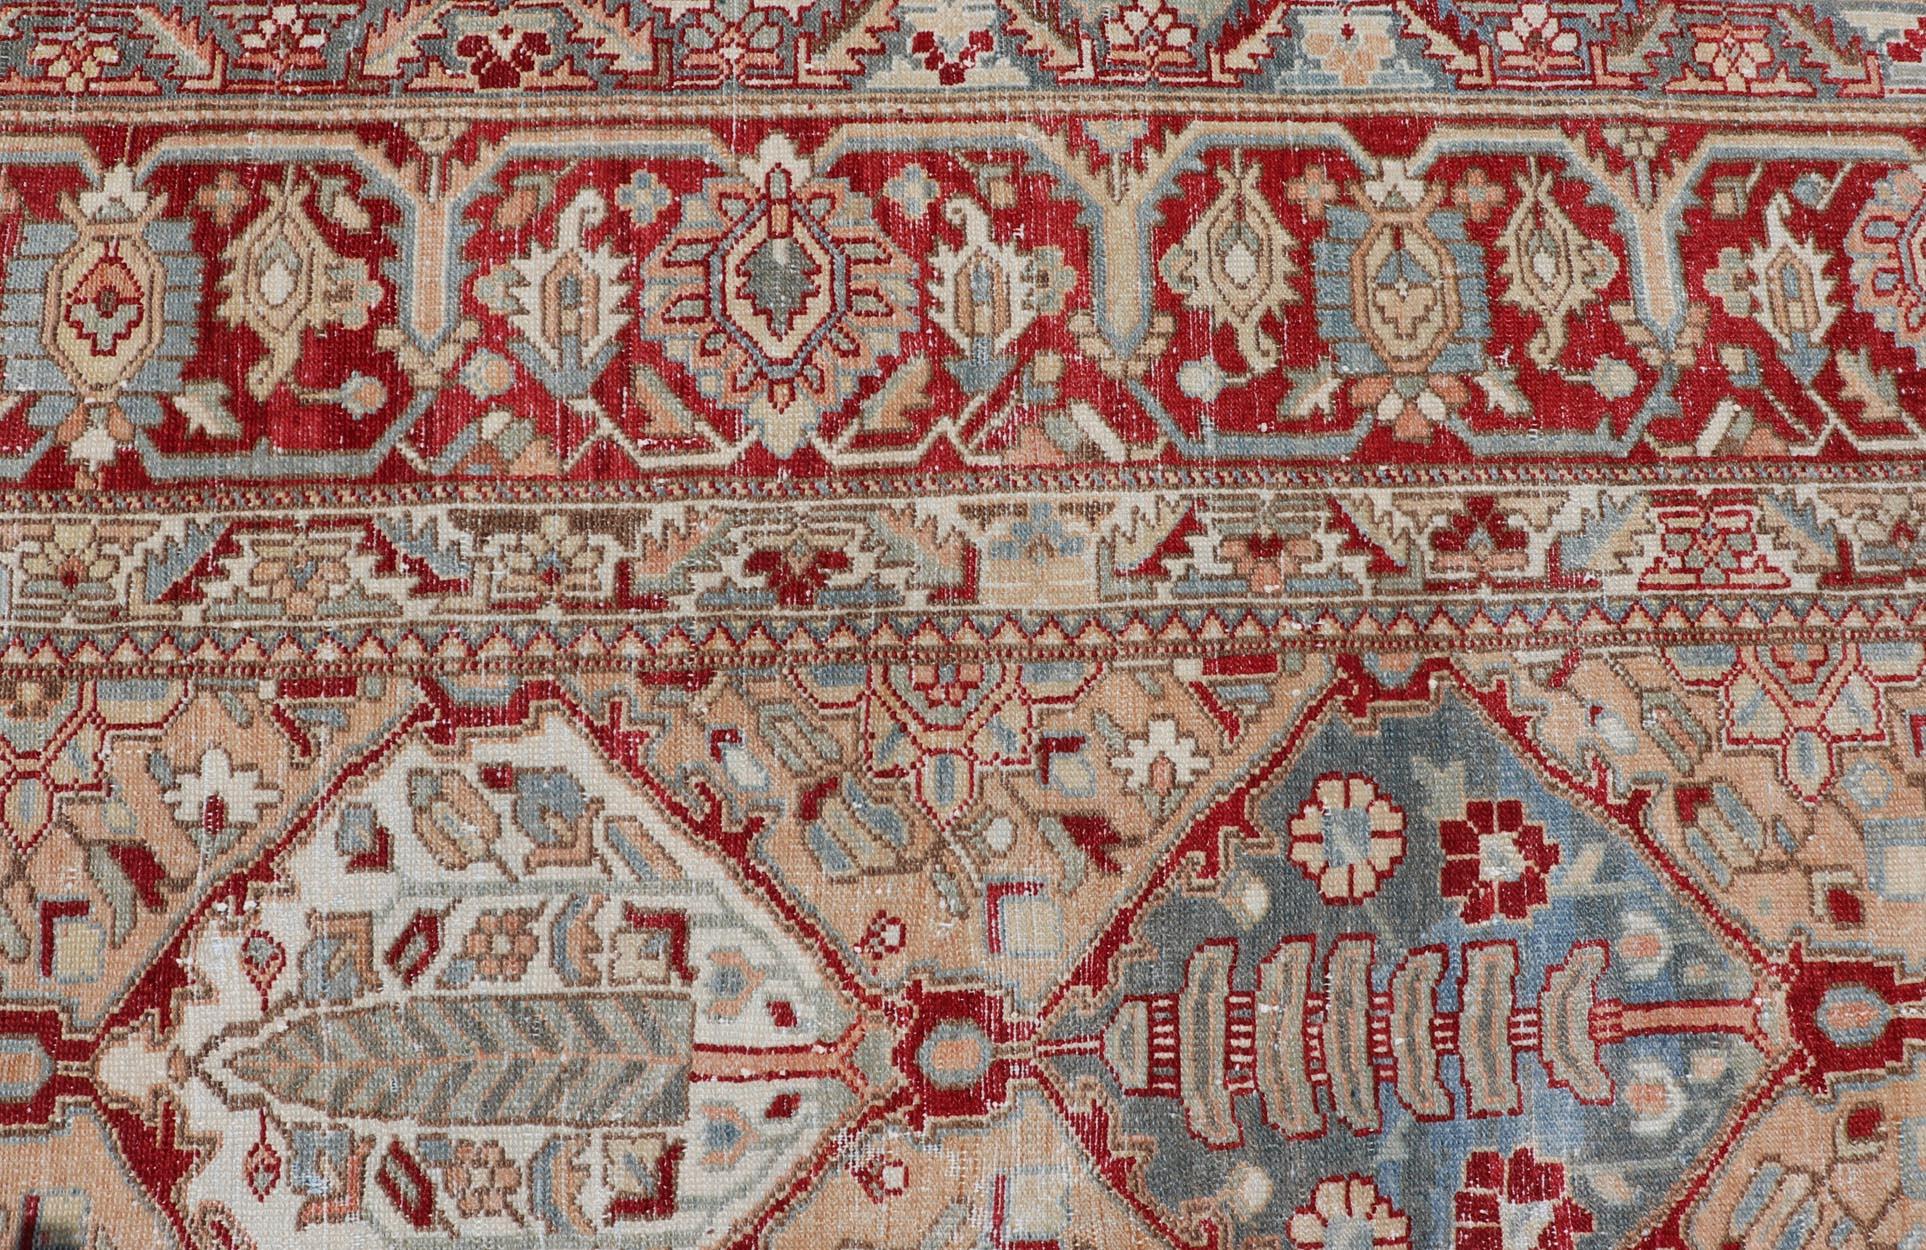 Antique Persian All-Over Garden Design  Bakhtiari Rug in Multi Colors  For Sale 6